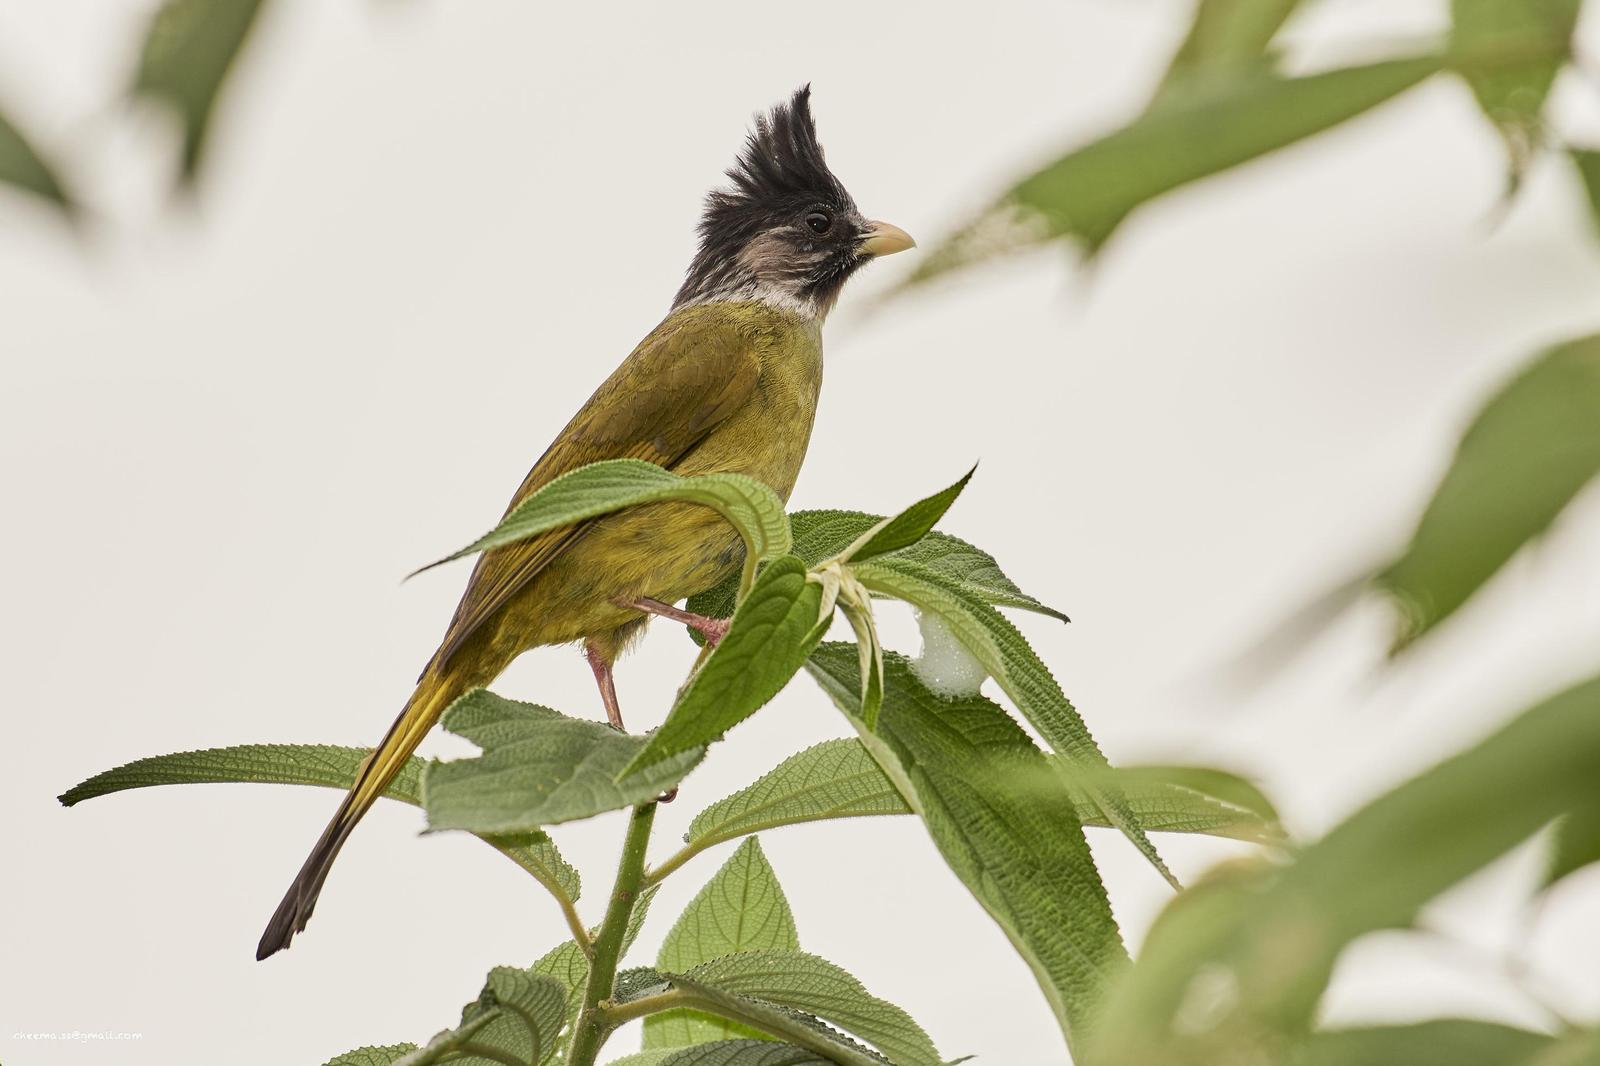 Crested Finchbill Photo by Simepreet Cheema